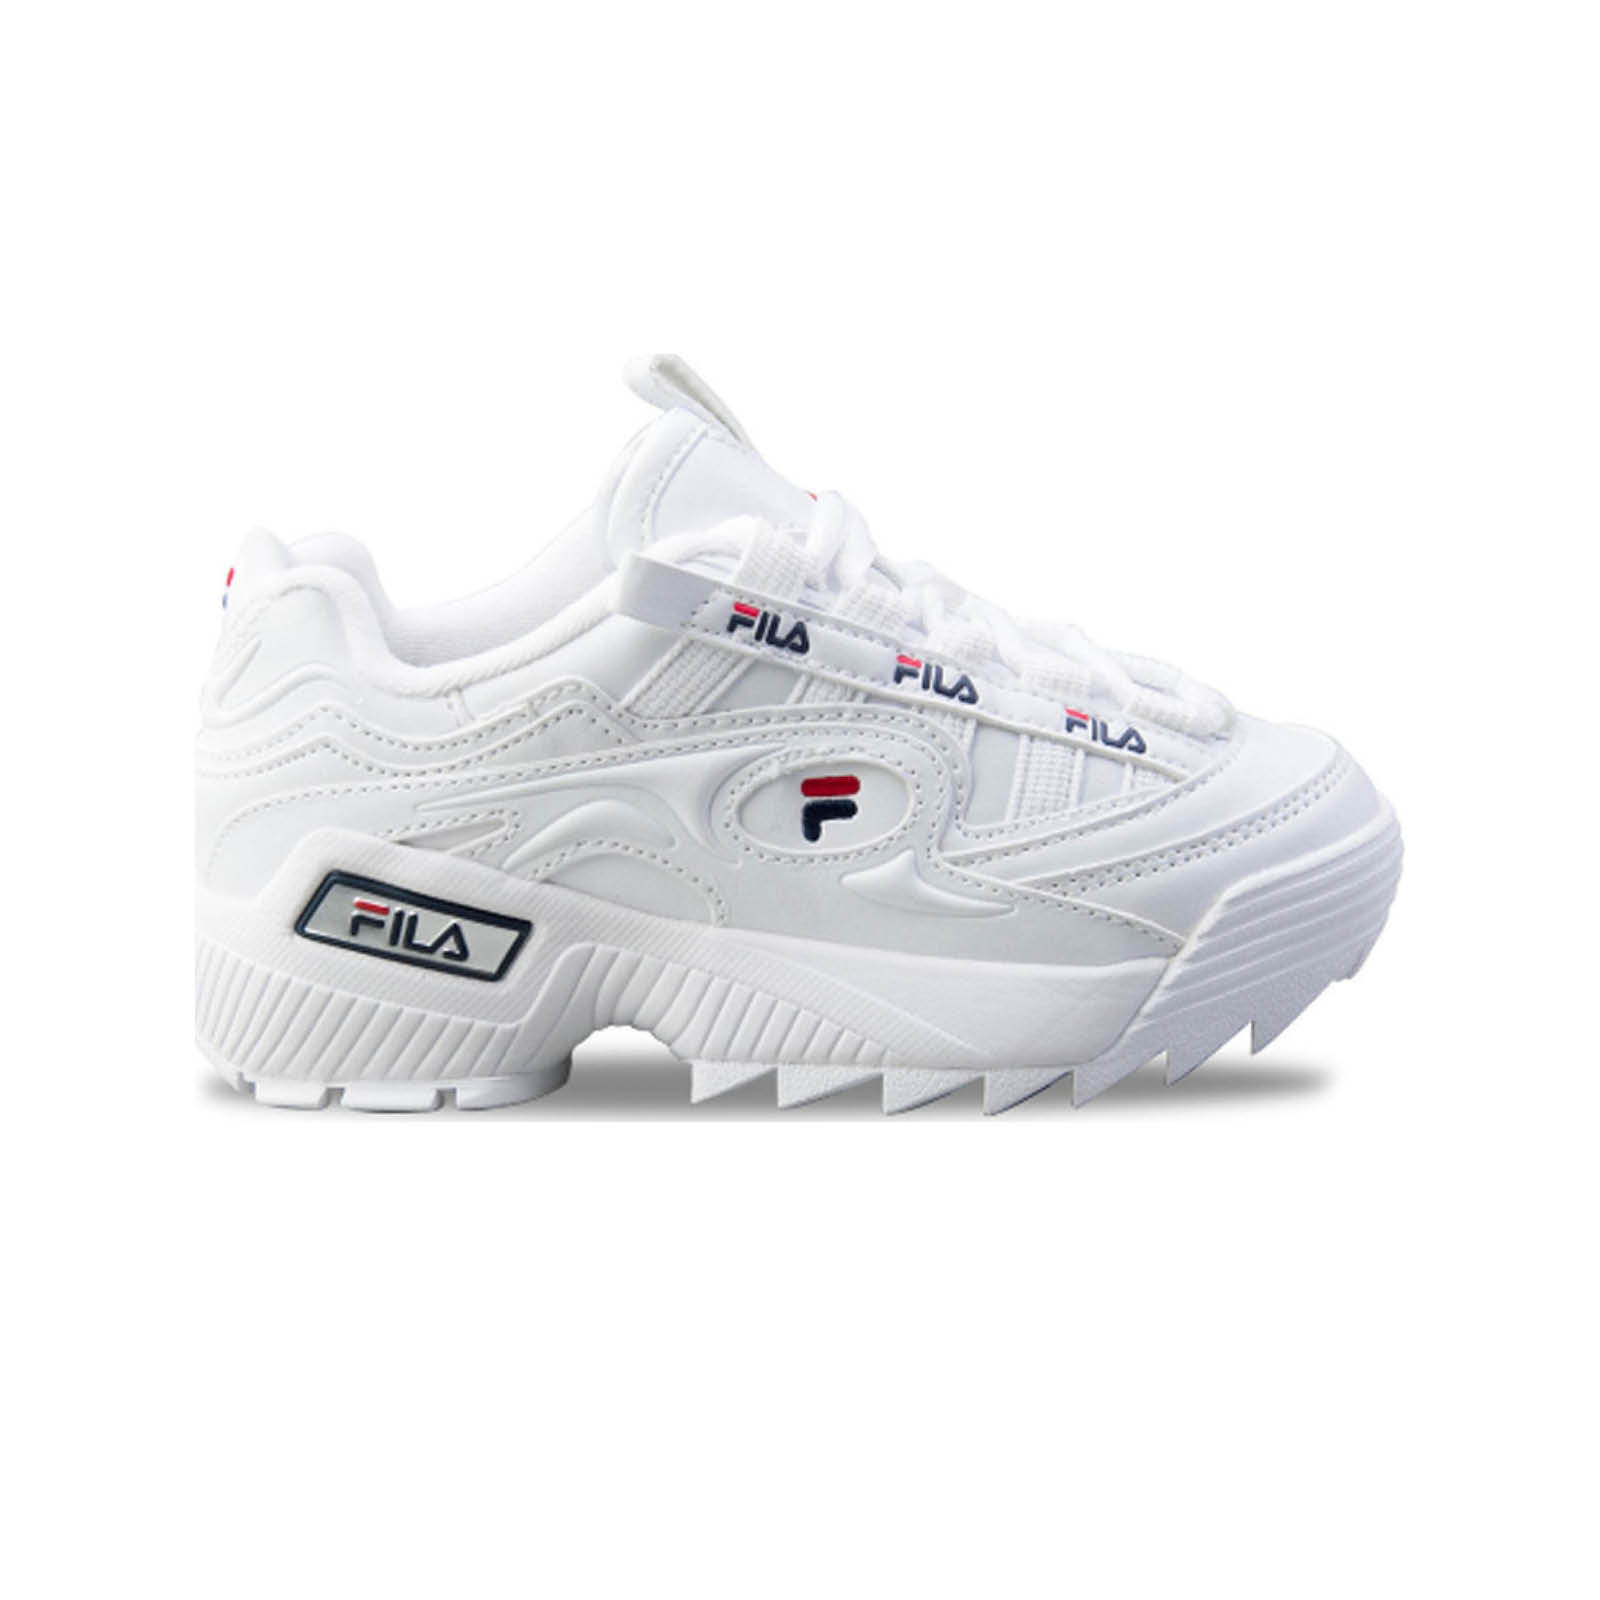 Fila - 1228689.0 D-FORMATION FOOTWEAR - WHITE Παιδικά > Παπούτσια > Αθλητικά > Παπούτσι Low Cut